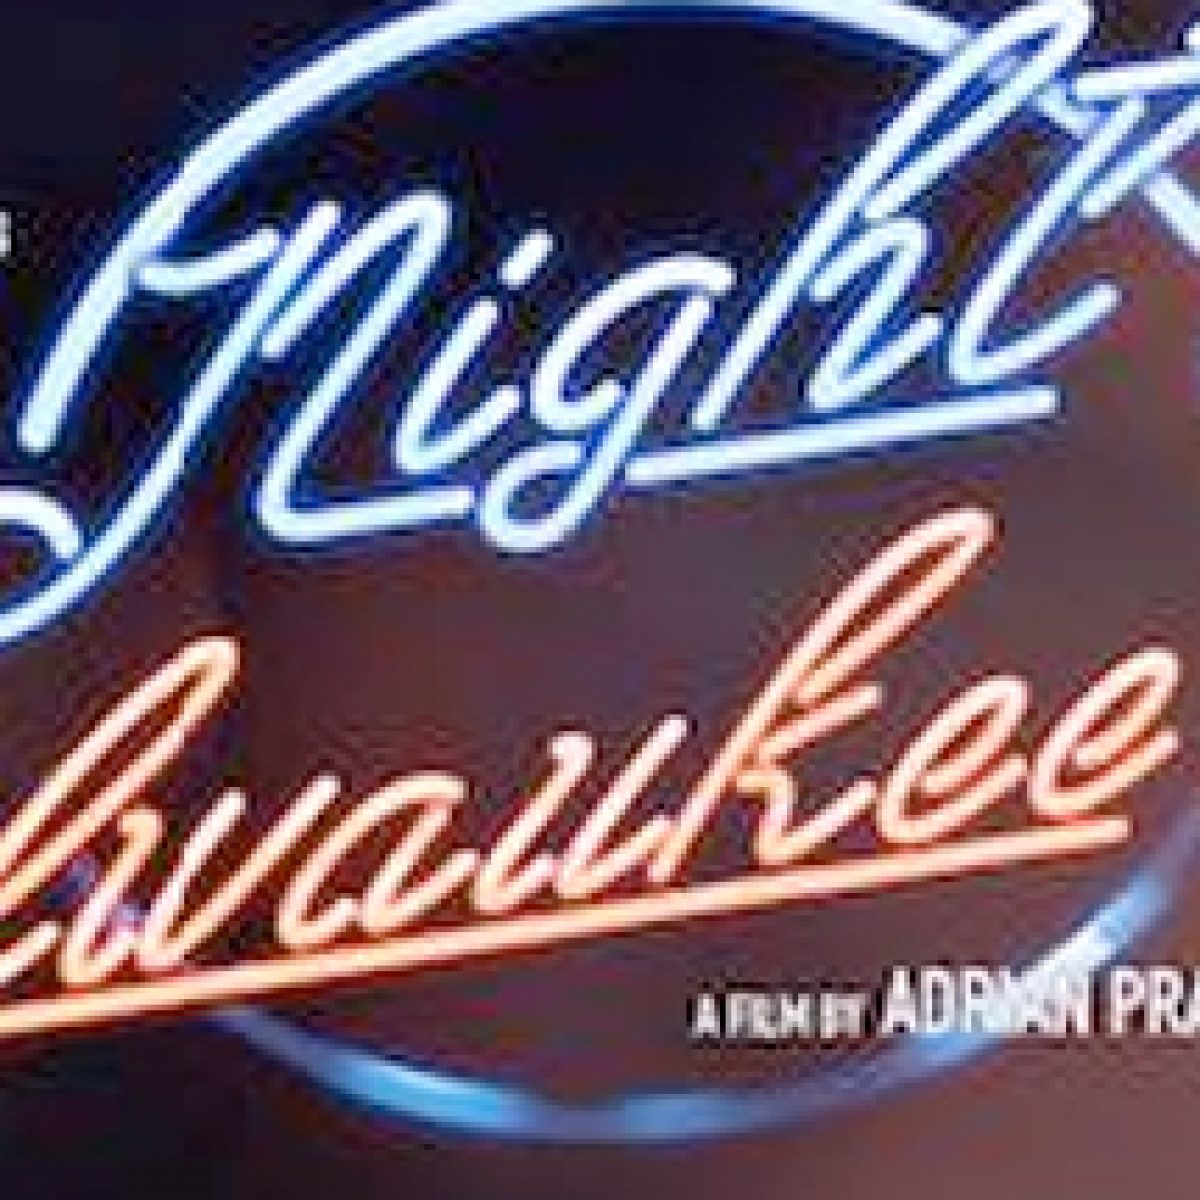 a night on milwaukee ave